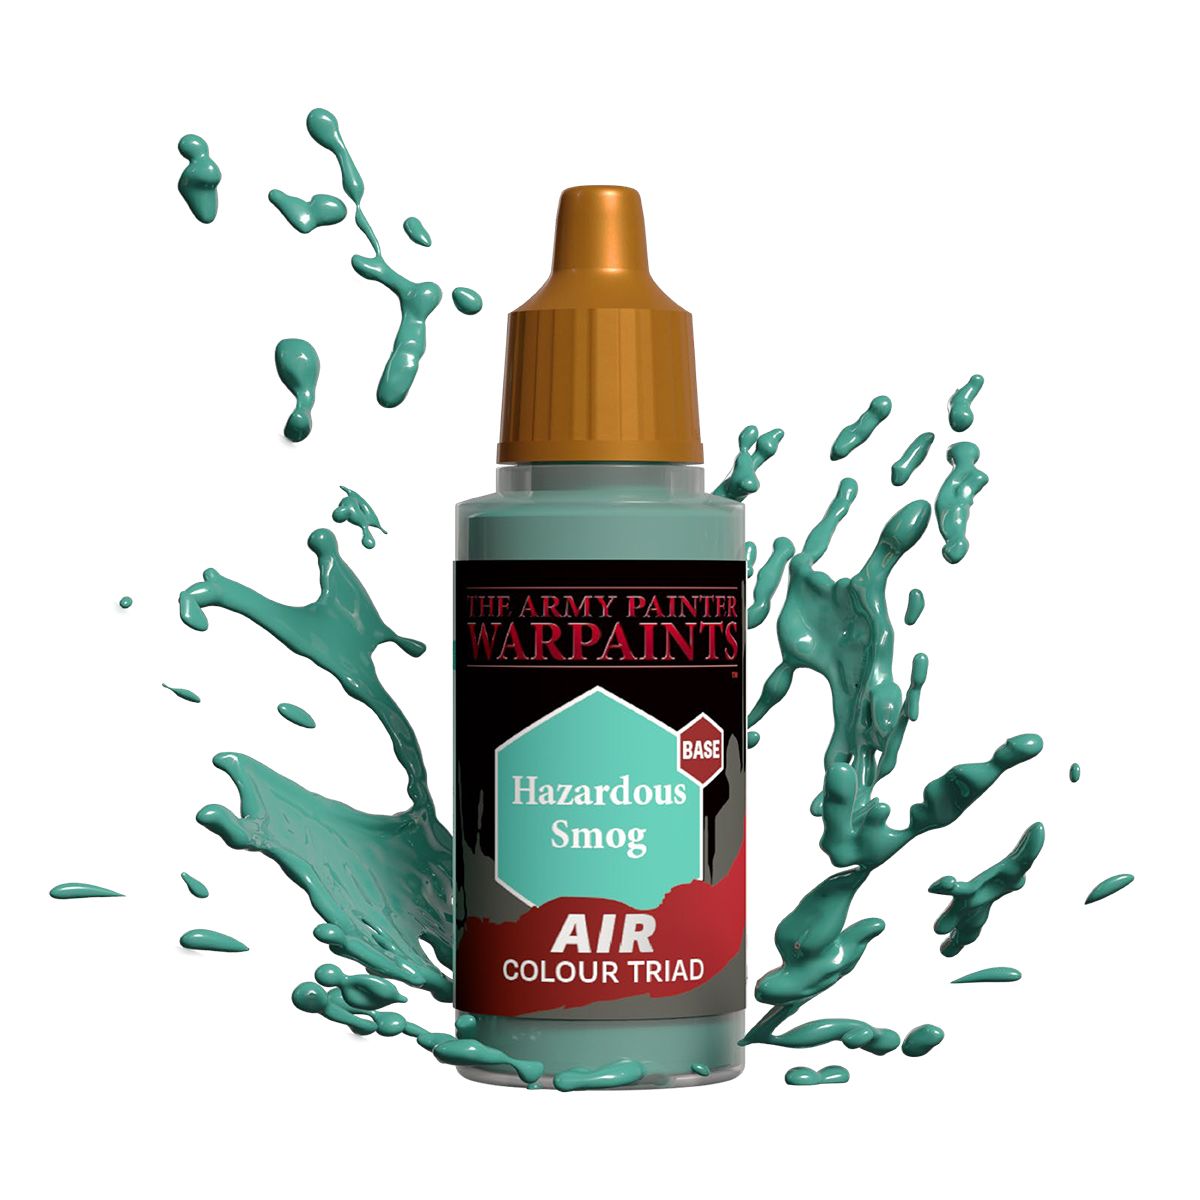 Army Painter Warpaints Air: Hazardous Smog 18ml